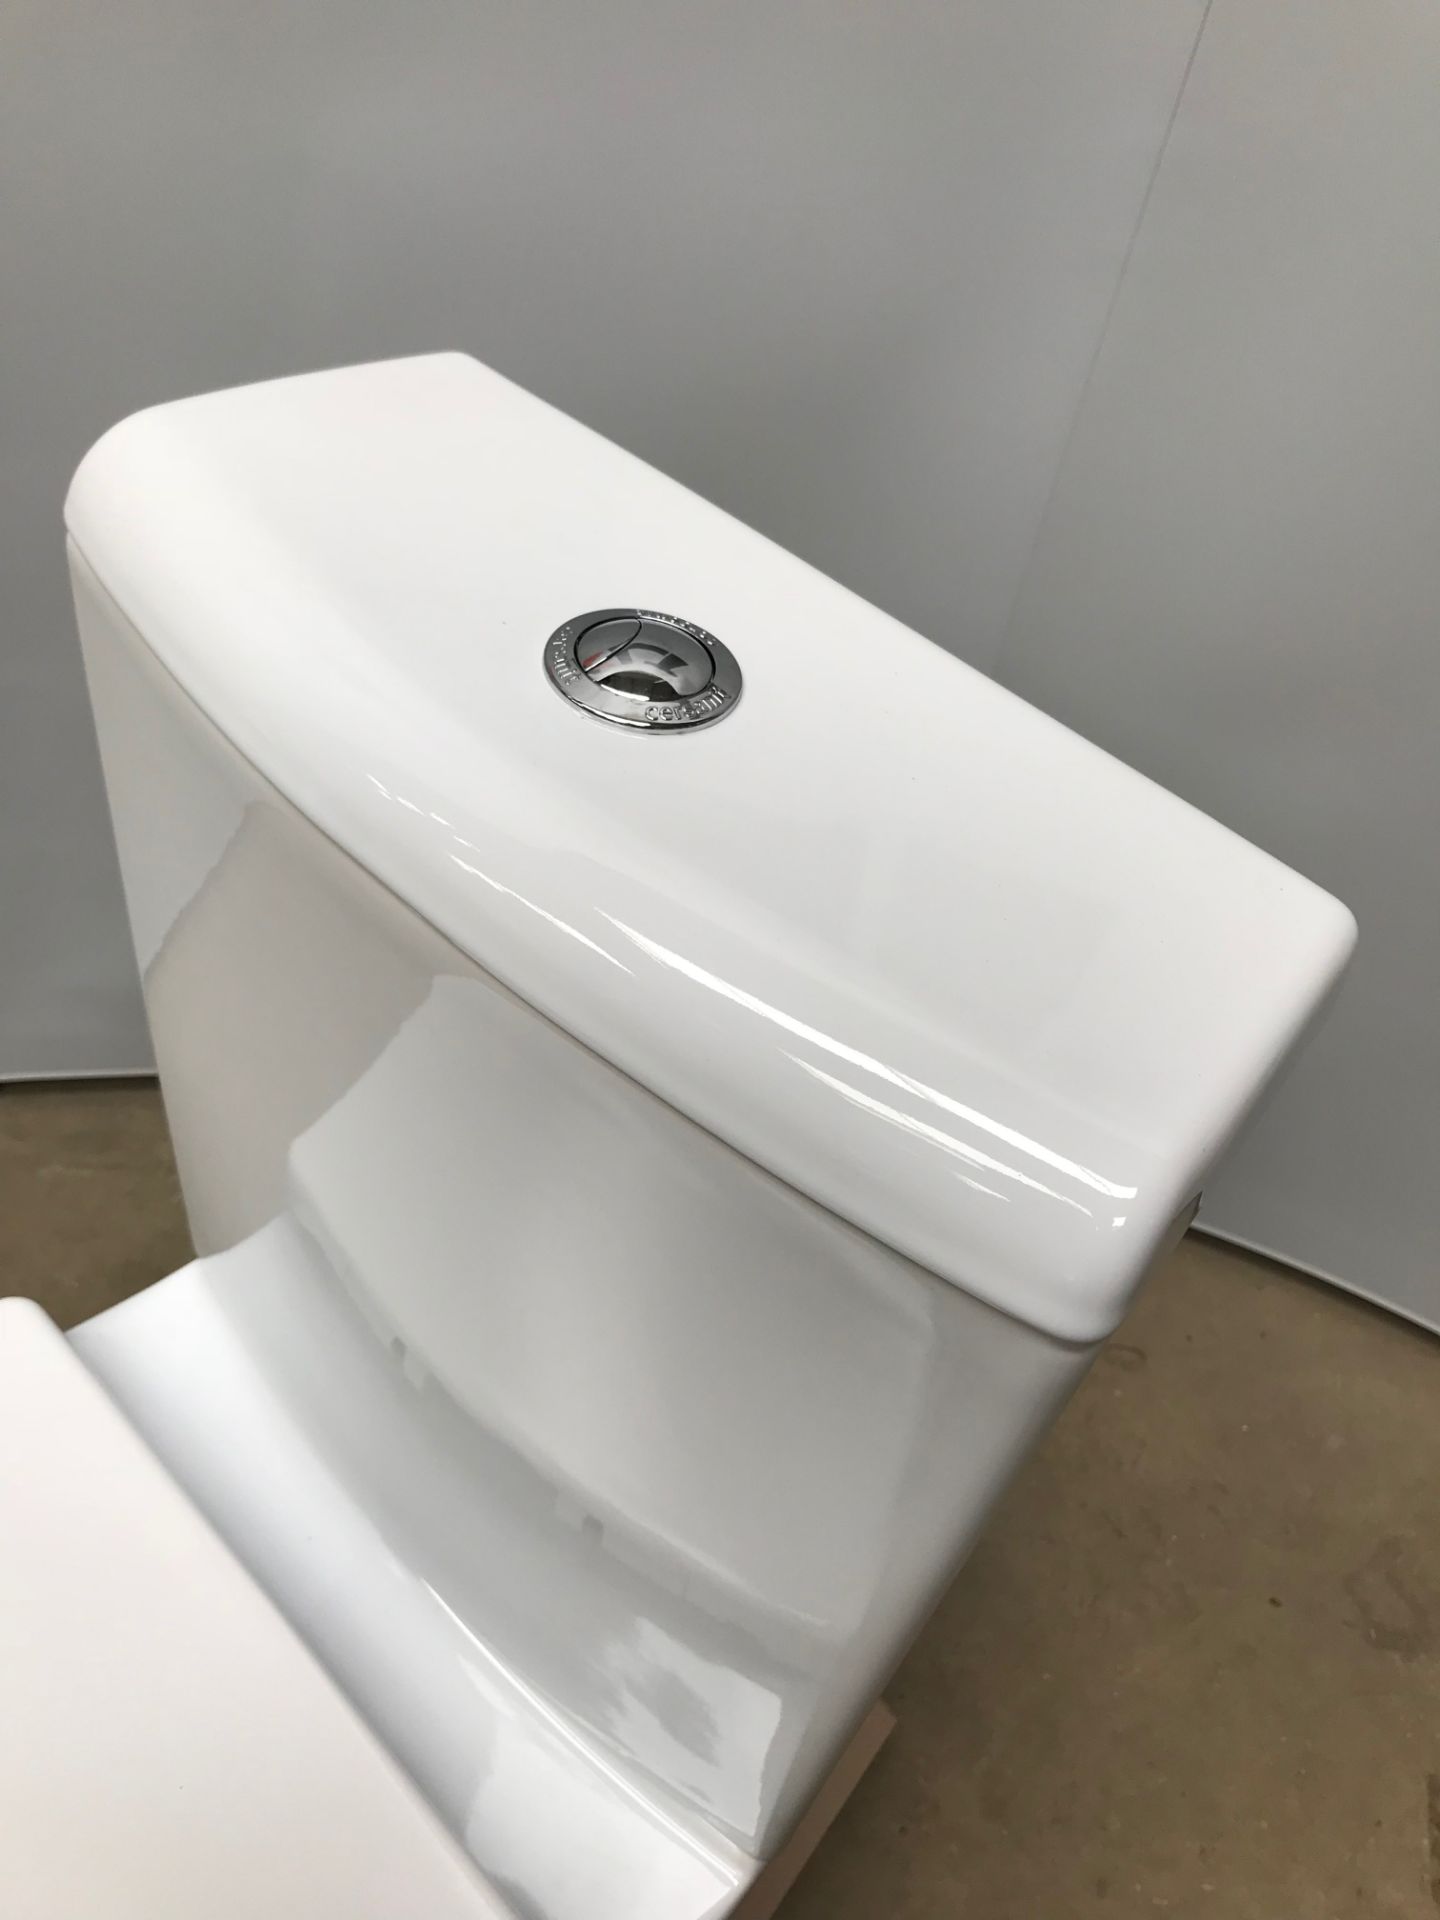 6 x Navassa Close Coupled Toilet with Soft Closure - Image 6 of 8